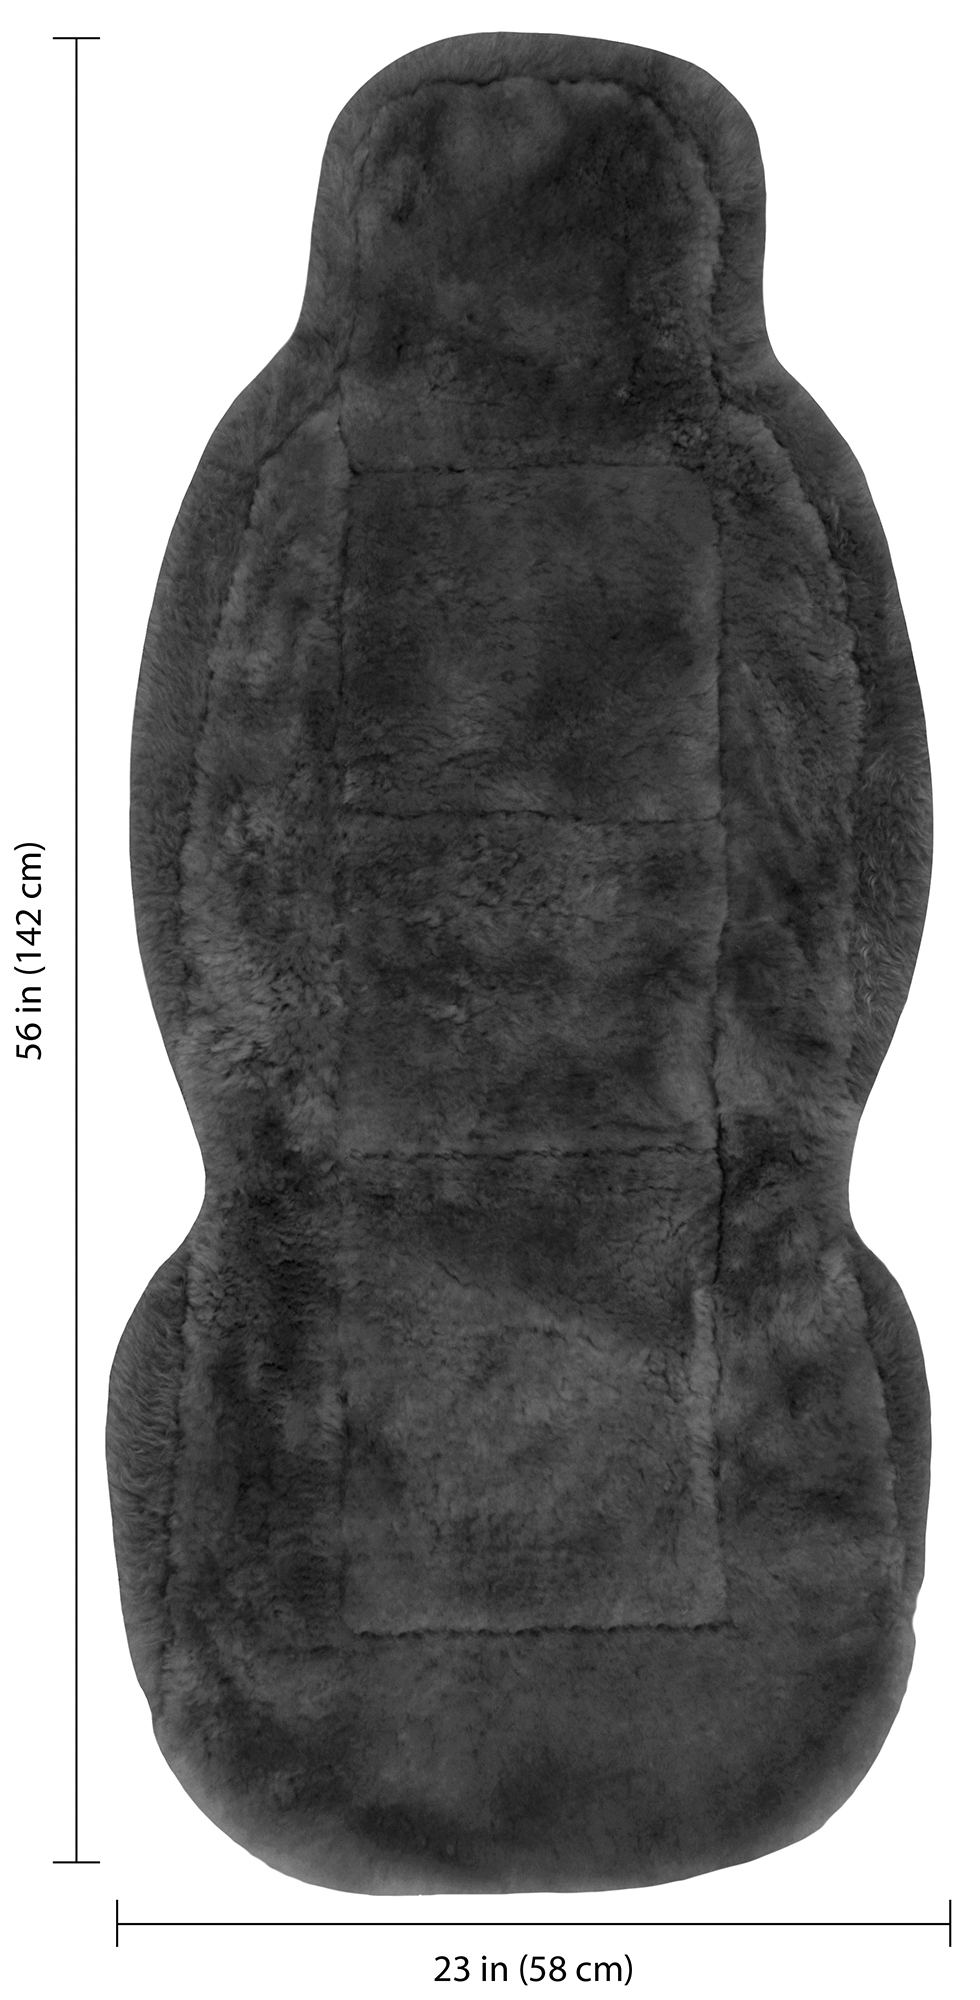 Eurow Sheepskin Seat Cover New XL Design Premium Pelt - Gray - image 3 of 6